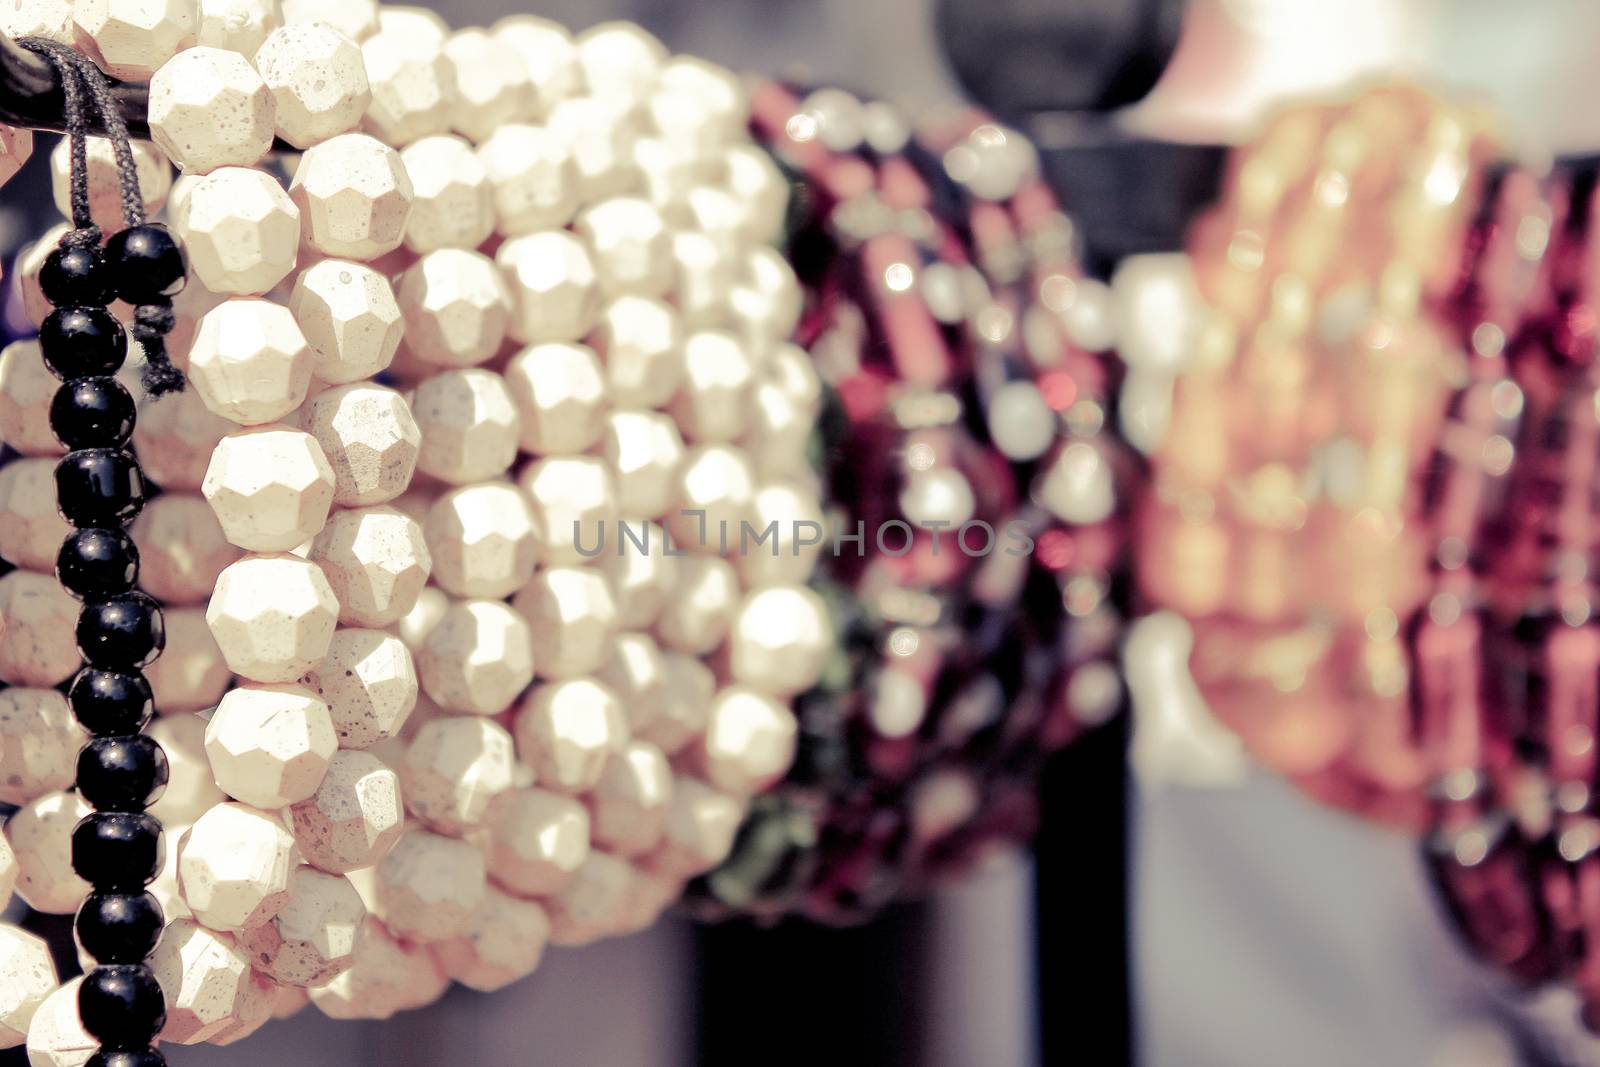 bead bangles in shop of surajkund fair, retro style by motionkarma